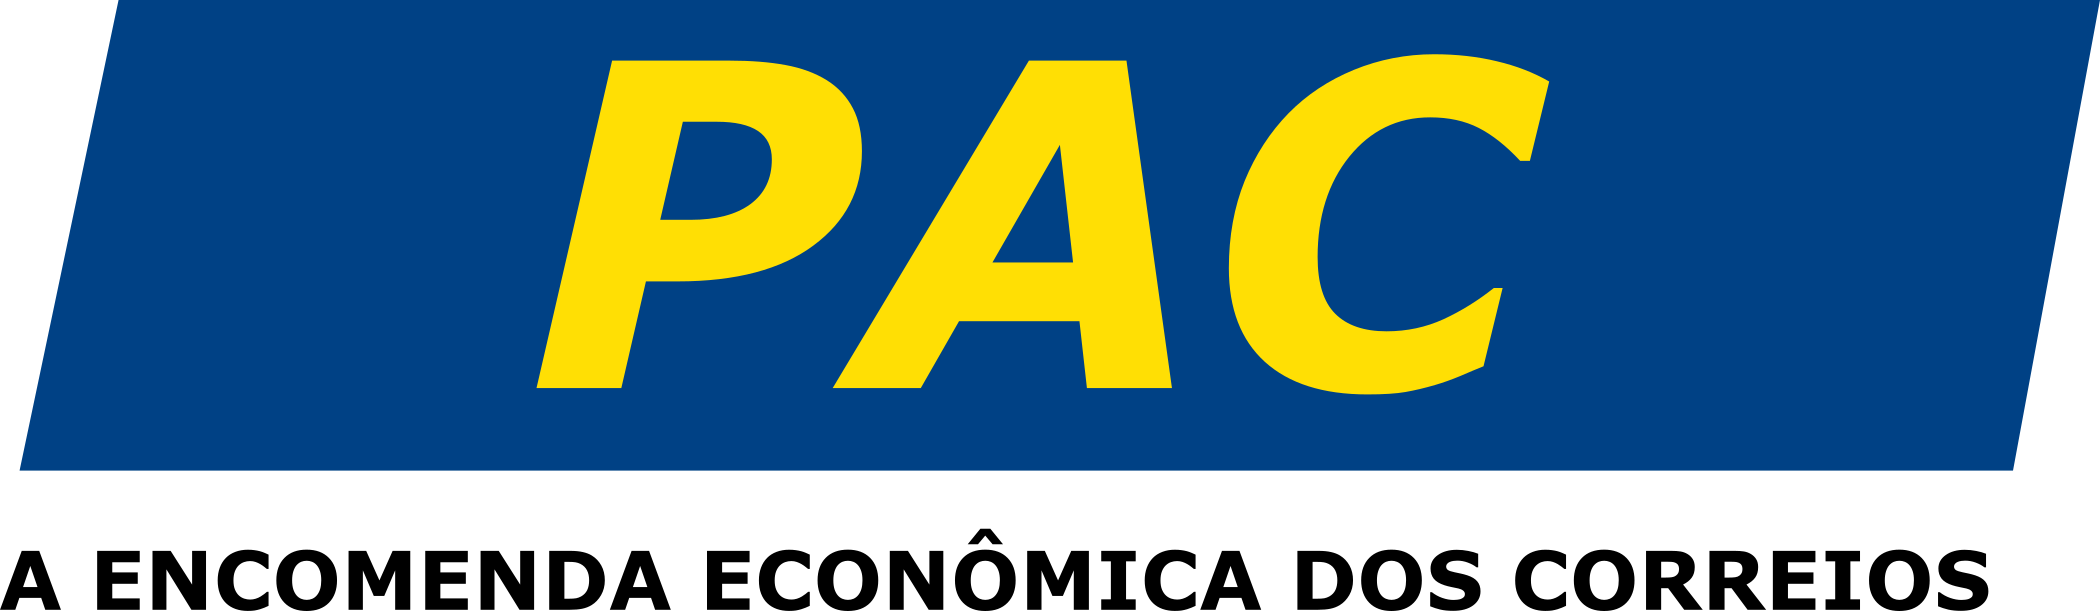 pac correios logo 2 - PAC Correios Logo